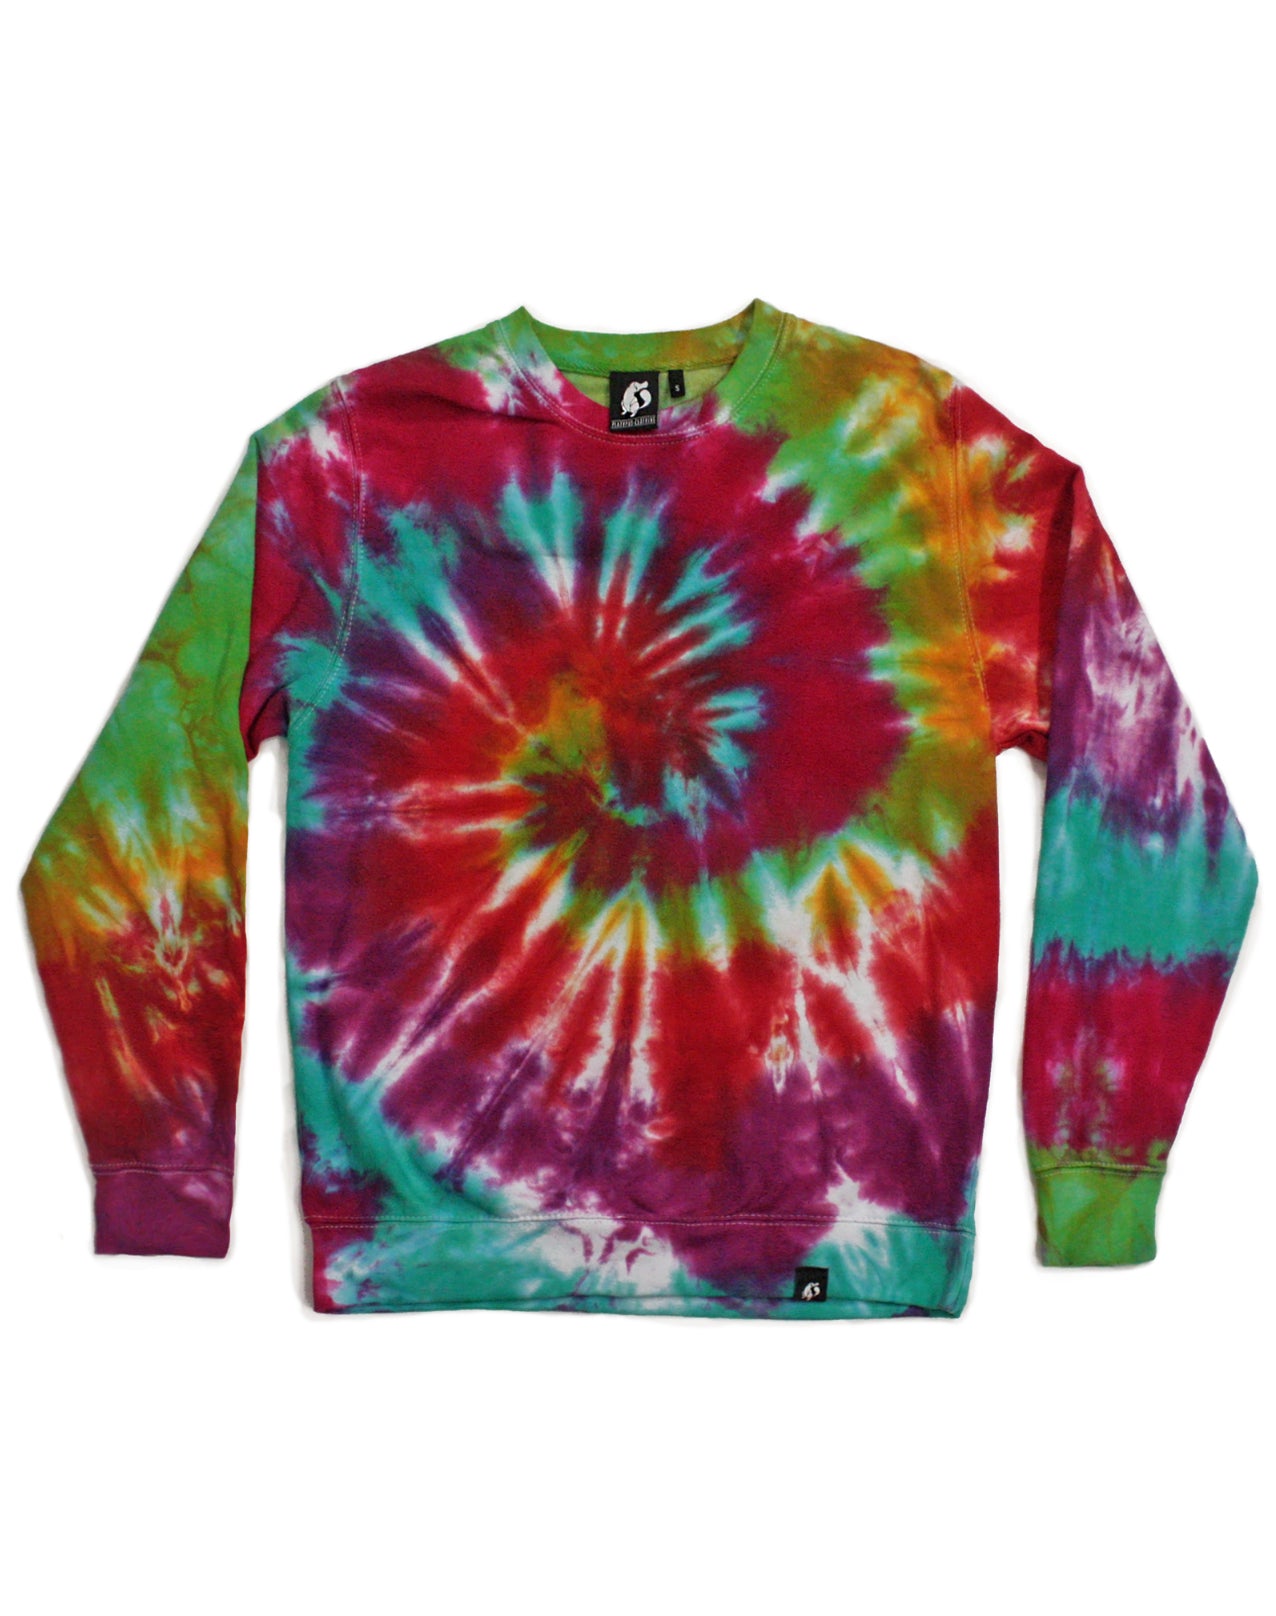 Tie Dye Rainbow Multi Spiral Sweatshirt - Size S